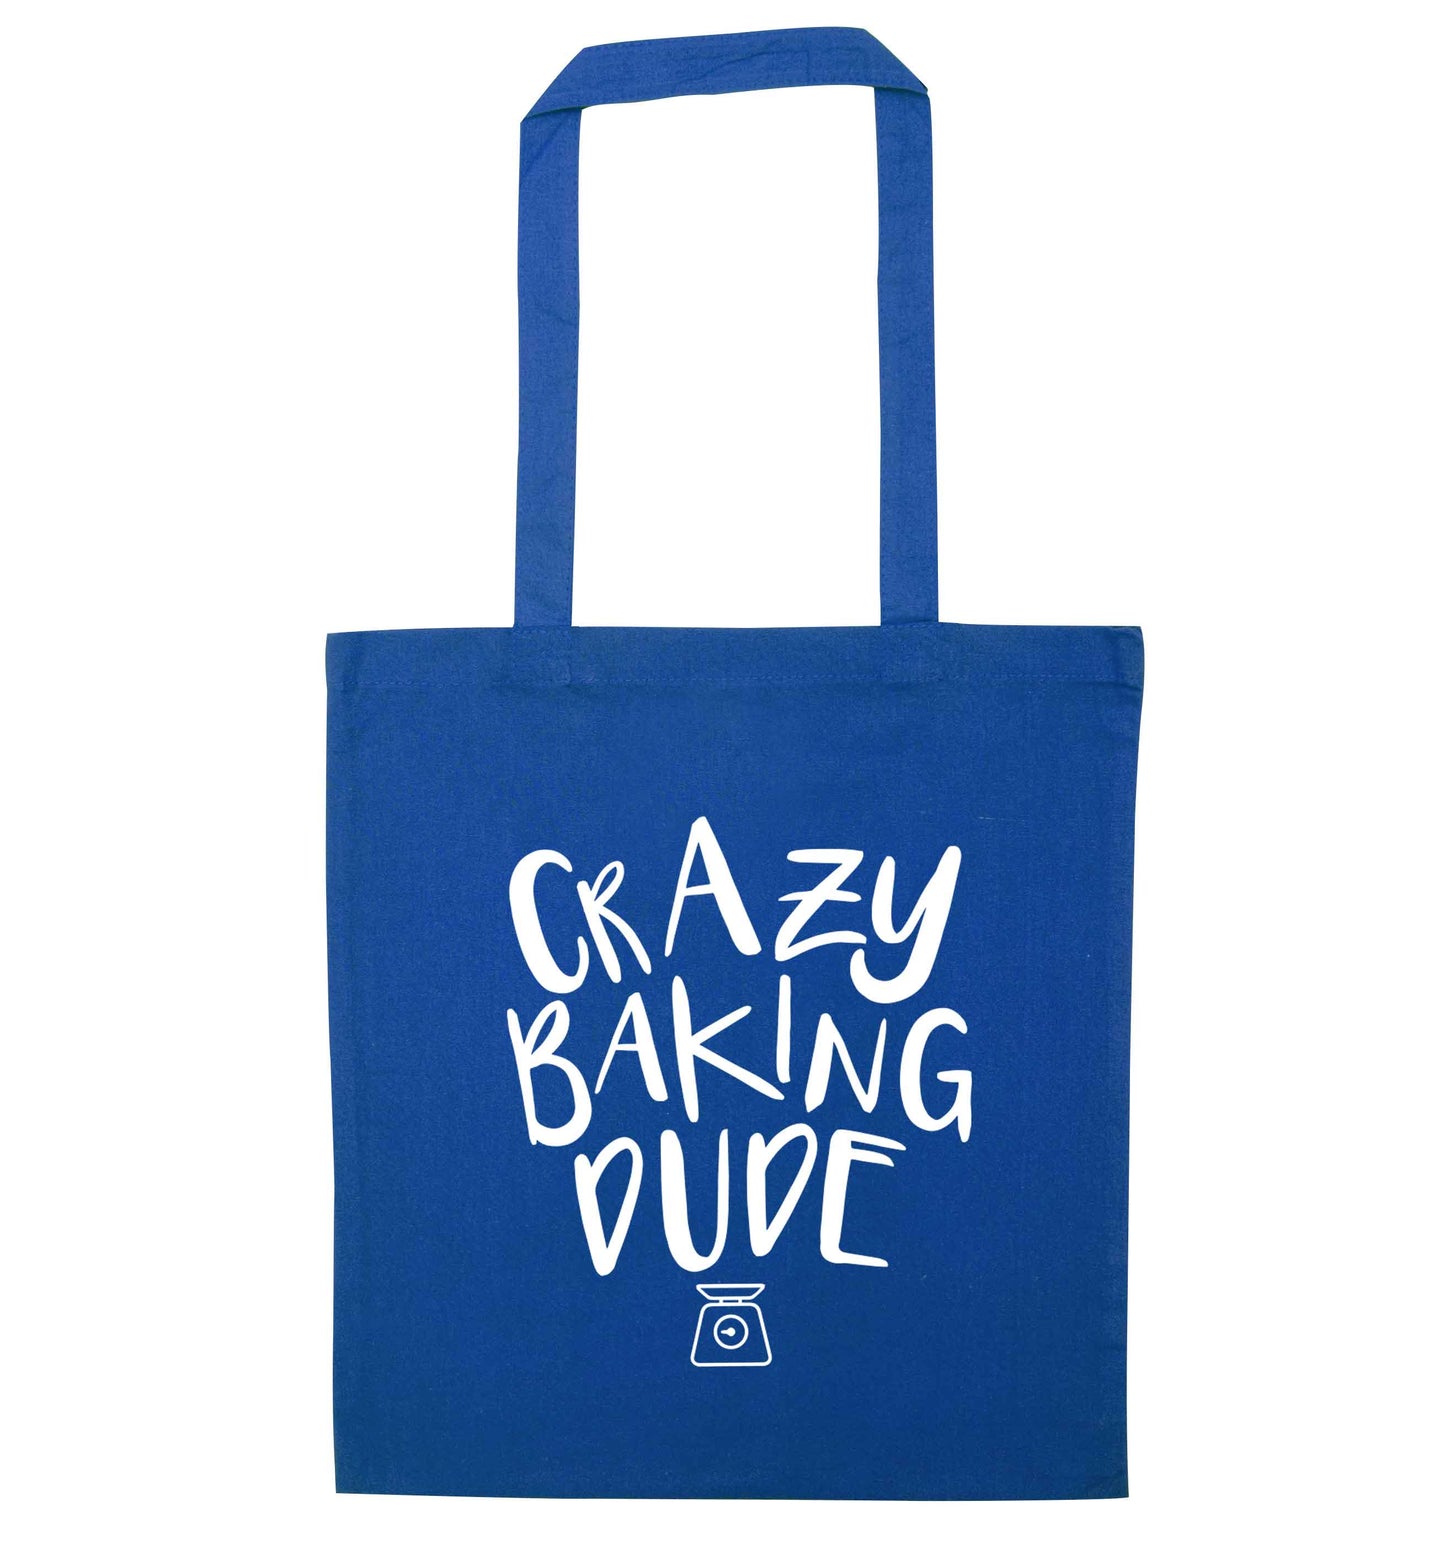 Crazy baking dude blue tote bag